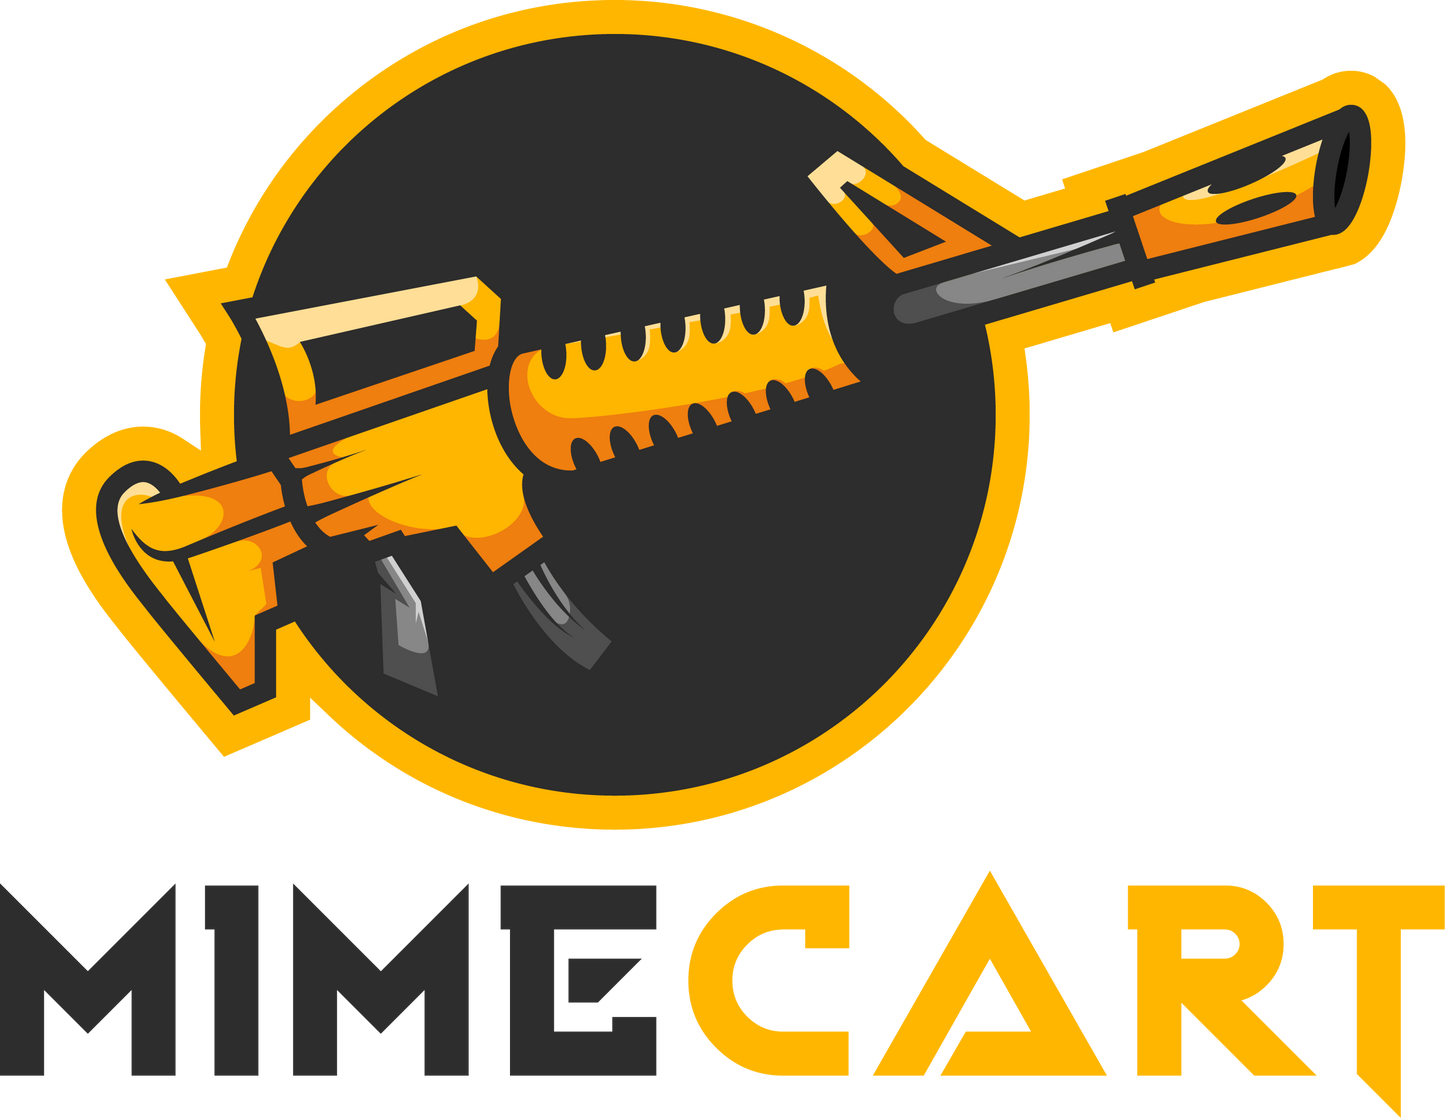 MimeCart